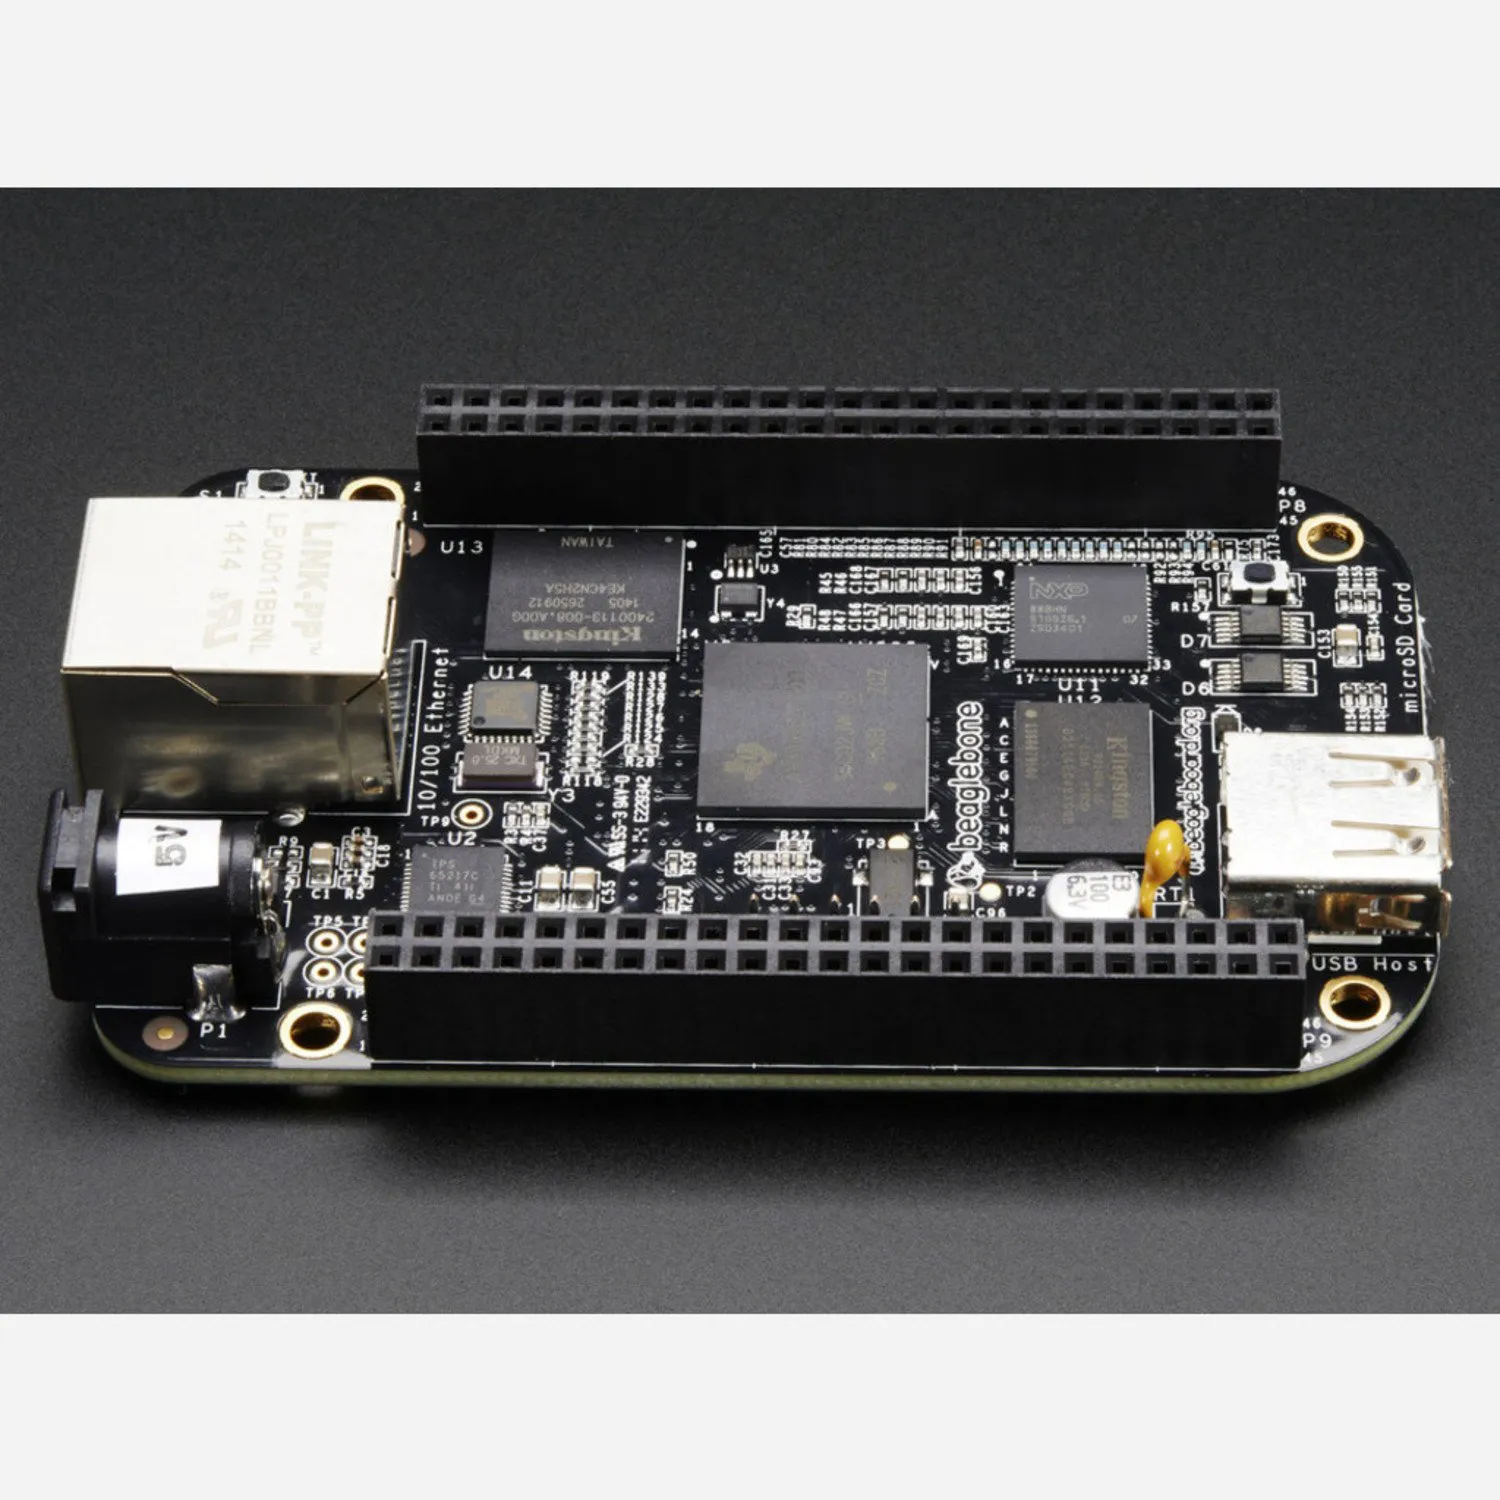 Photo of BeagleBone Black Rev C - 4GB Flash - Pre-installed Debian